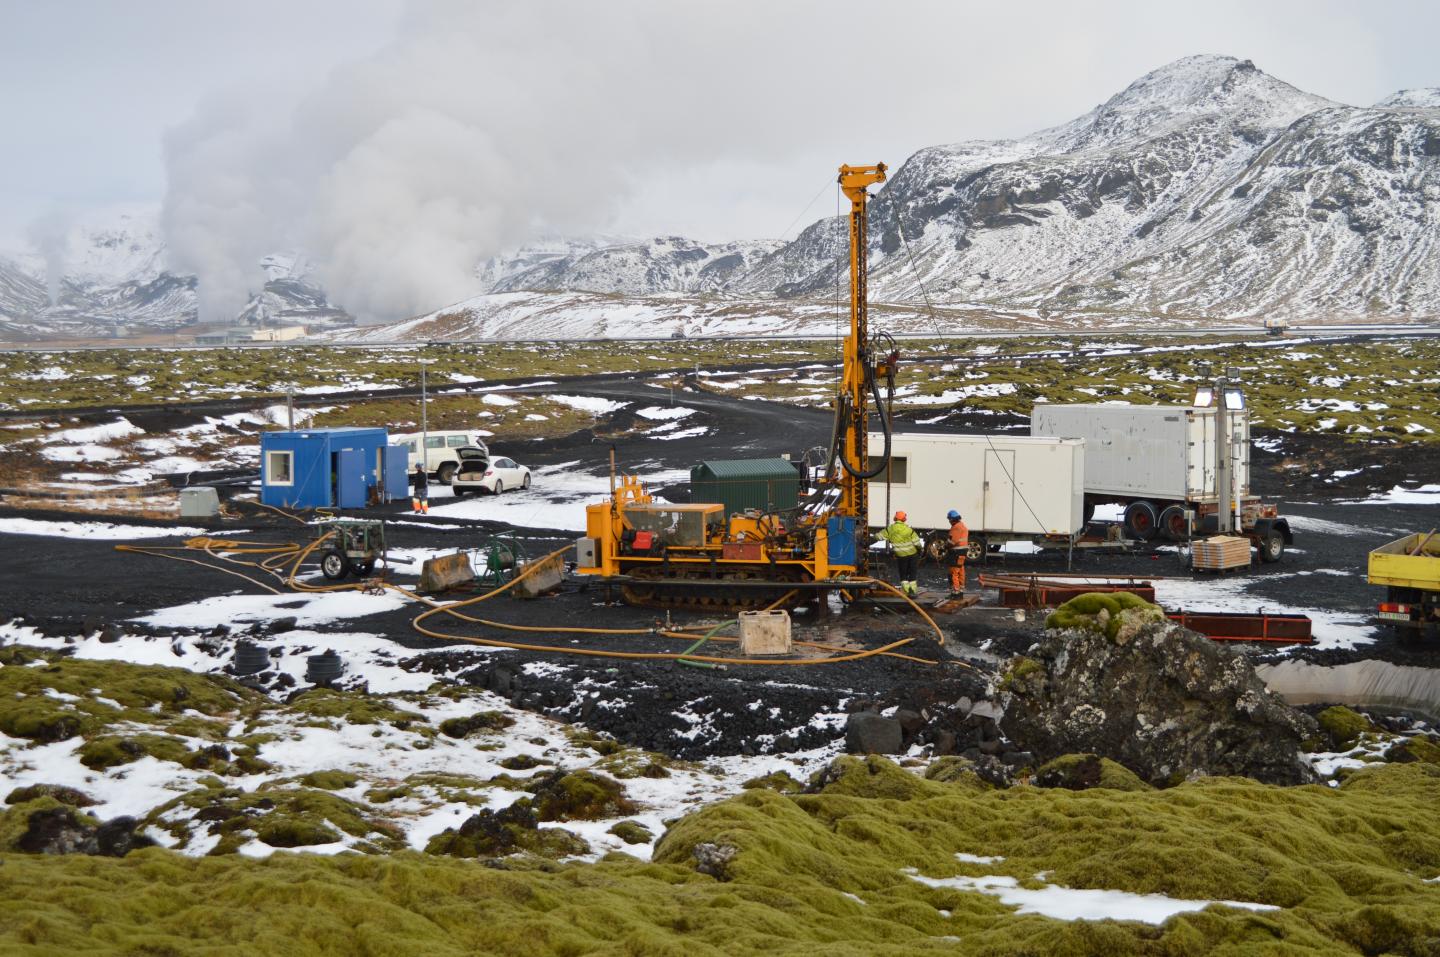 Basaltic Rocks in Iceland Effective Sinks for Atmospheric Carbon Dioxide